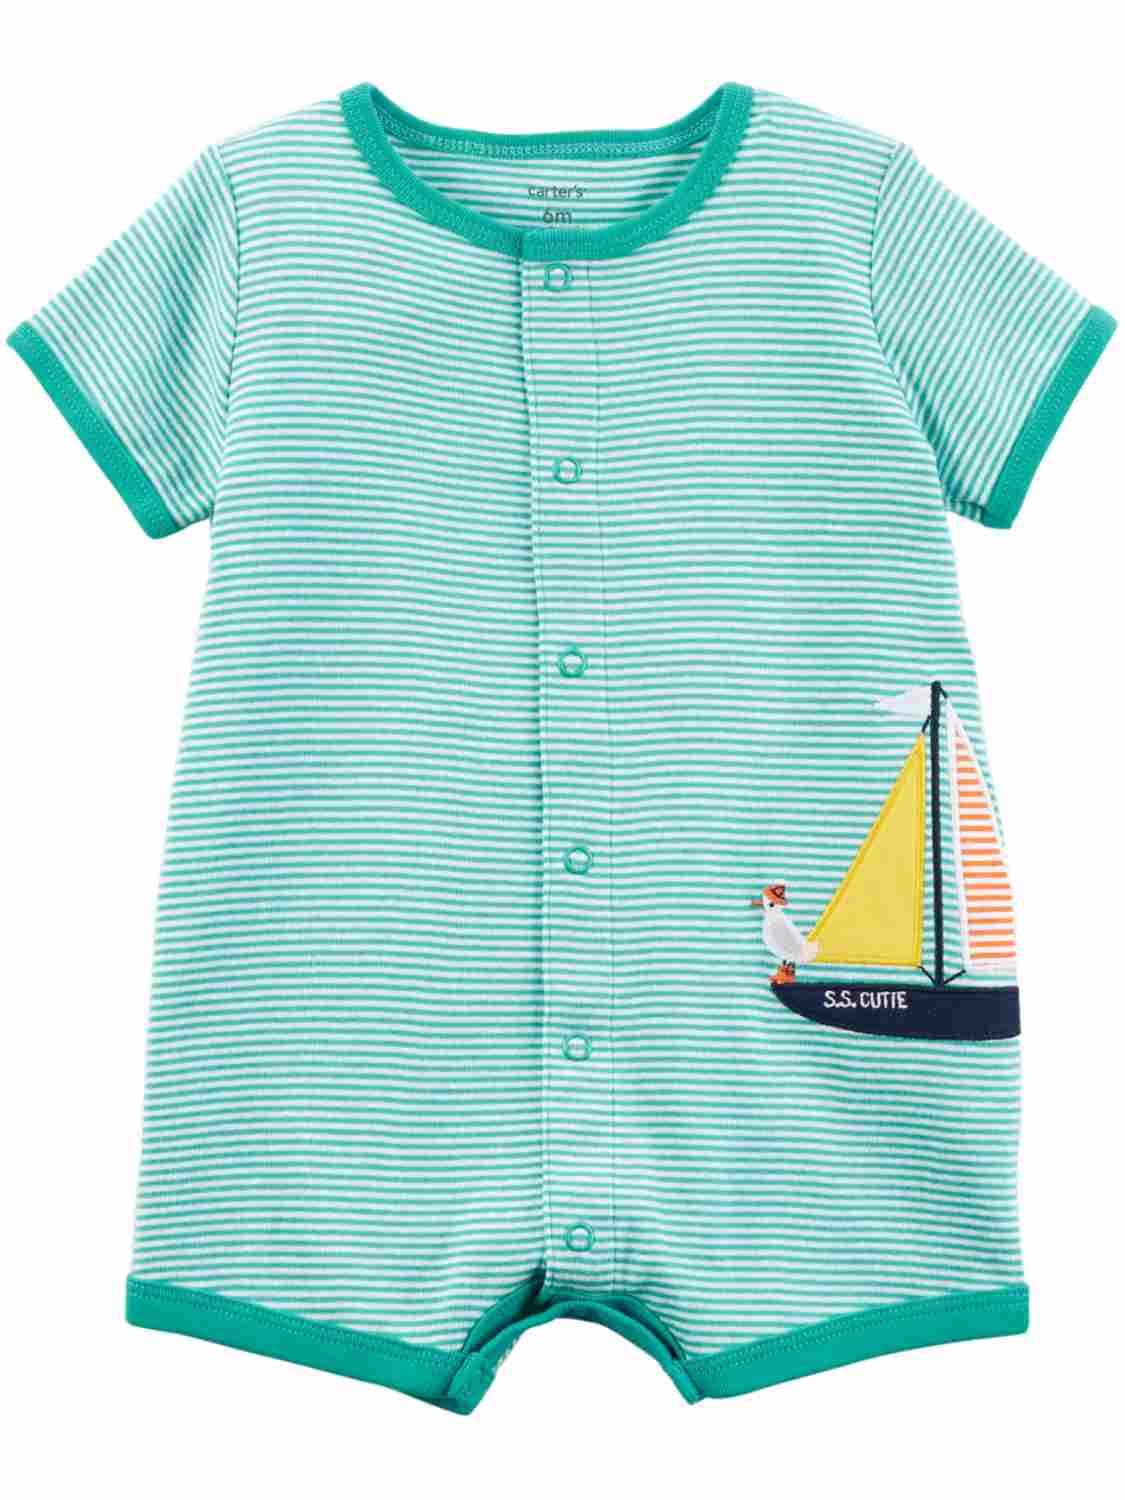 Infant Boys Sailboat Bodysuit Baby Outfit Blue Stripe Boat & Bird 